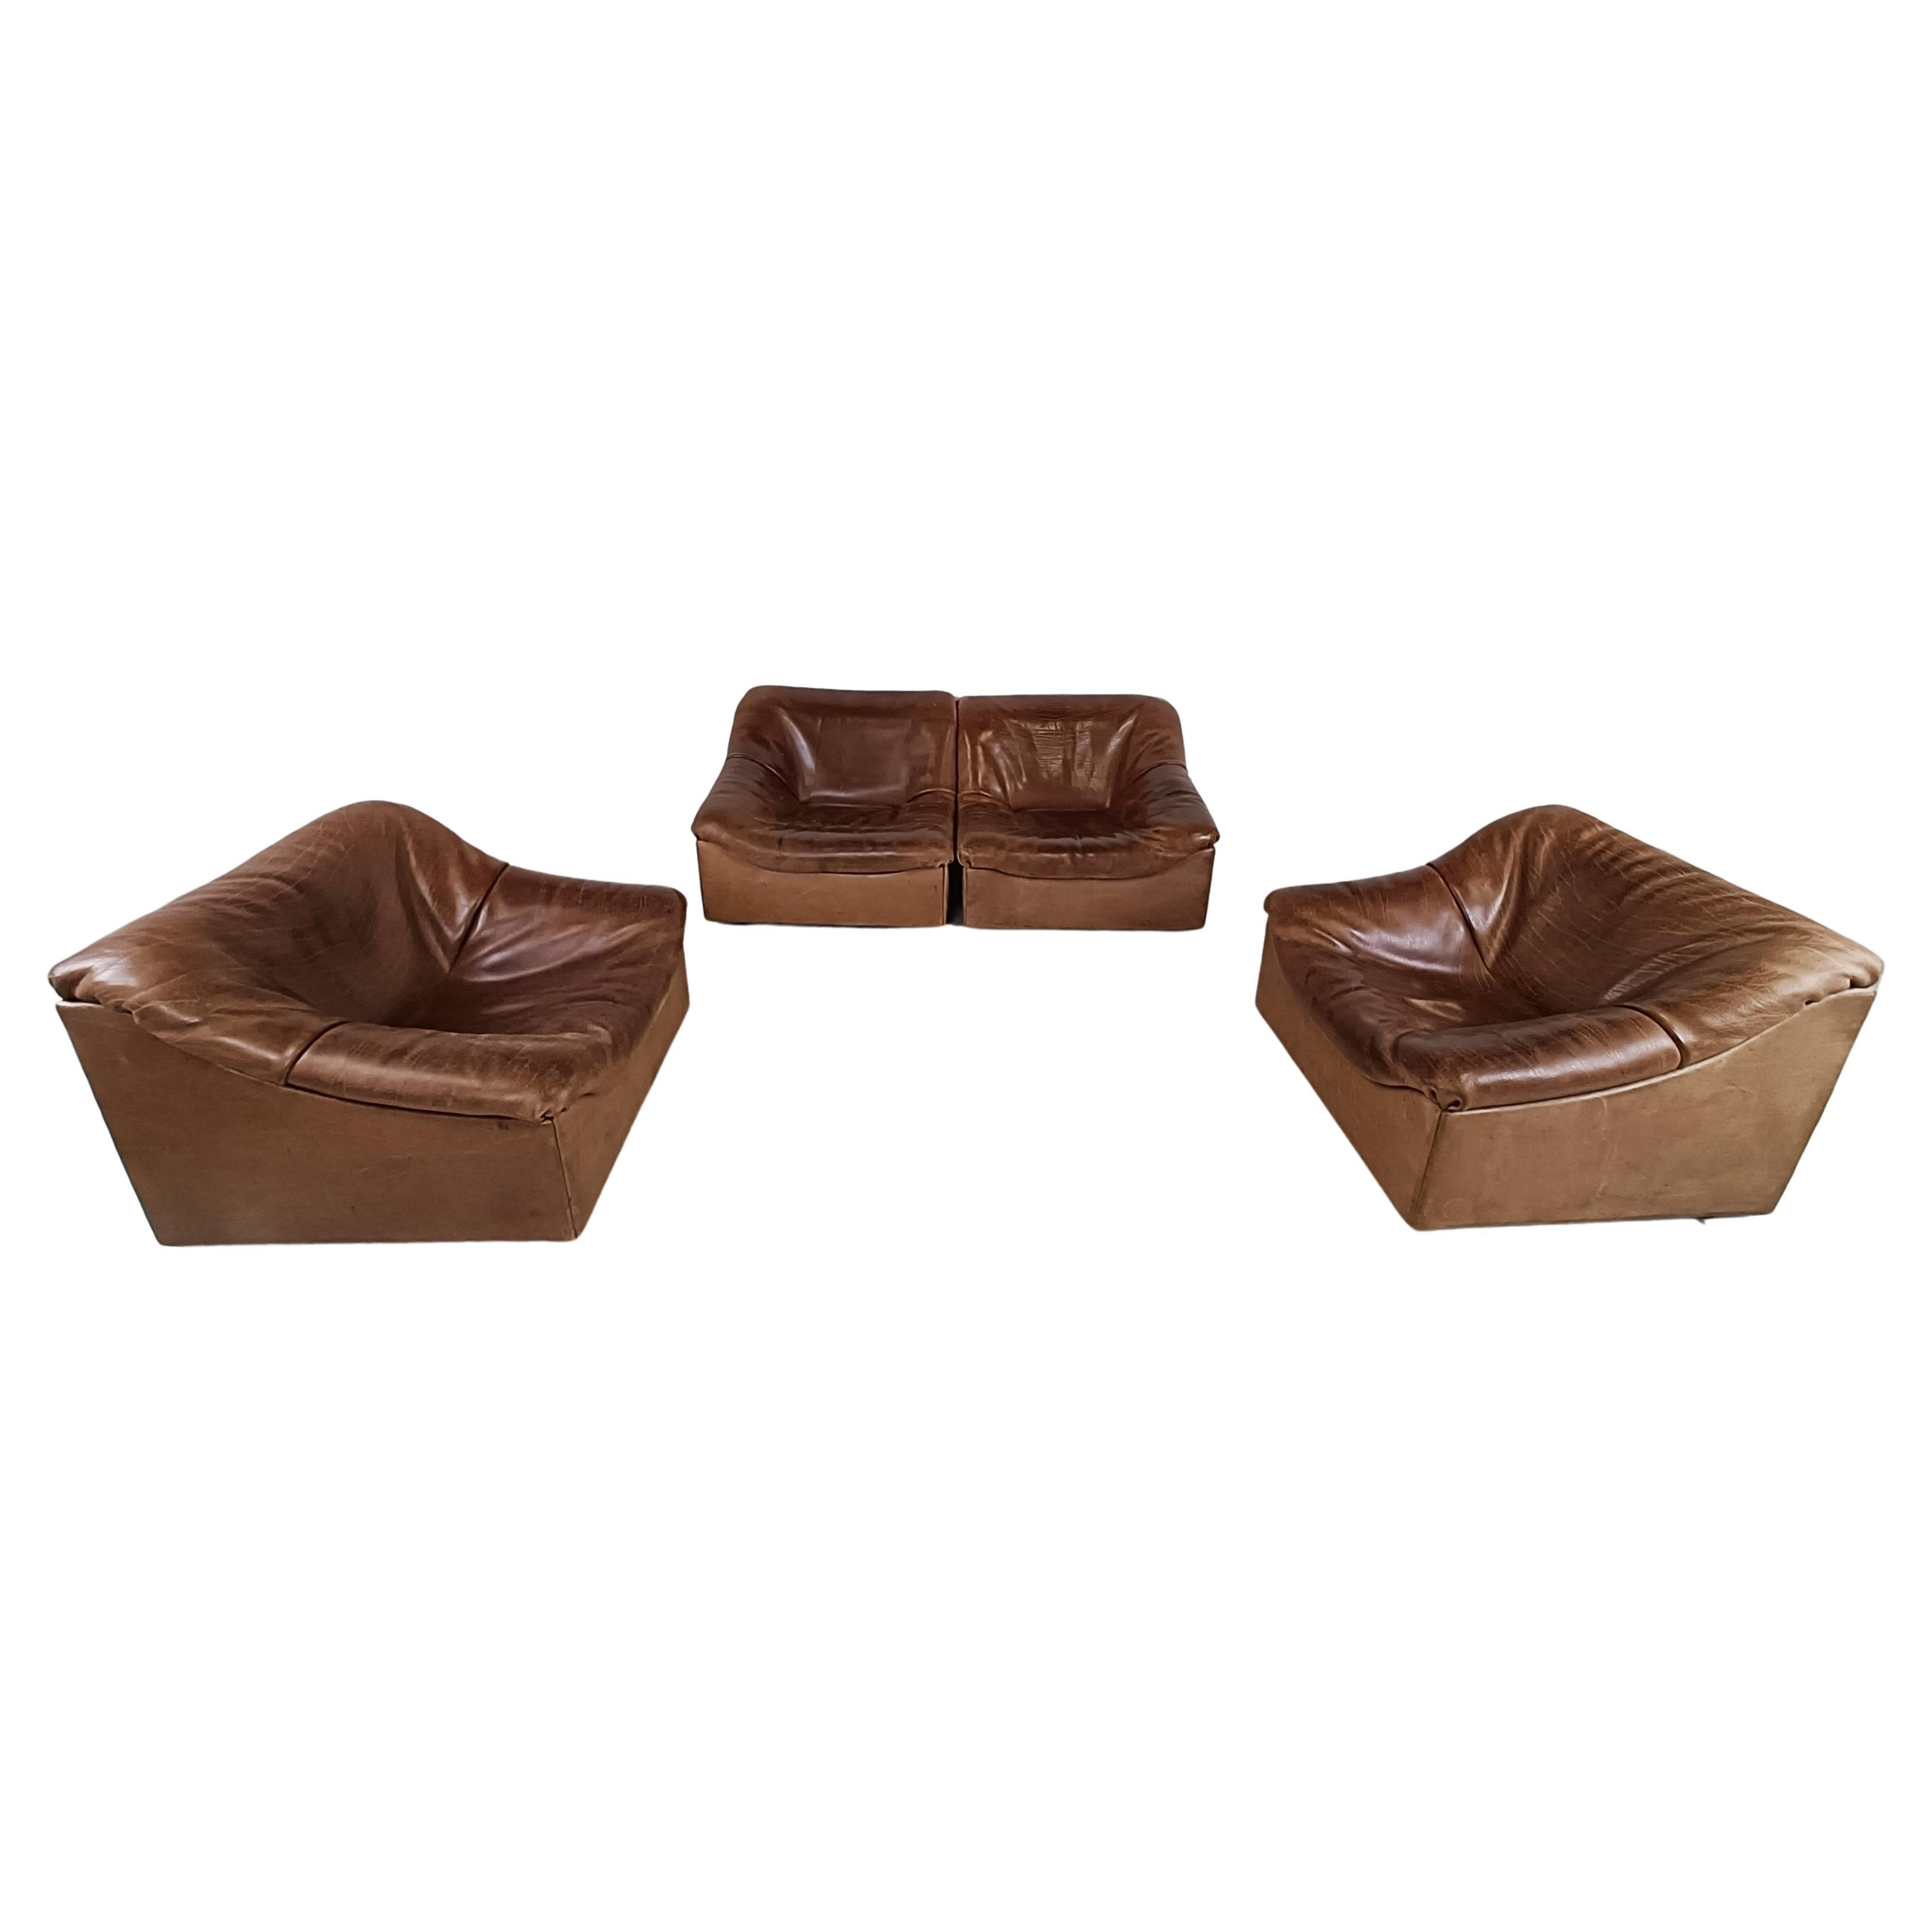 Vintage Leather Ds46 Modular Sofa by De Sede, 1970s For Sale